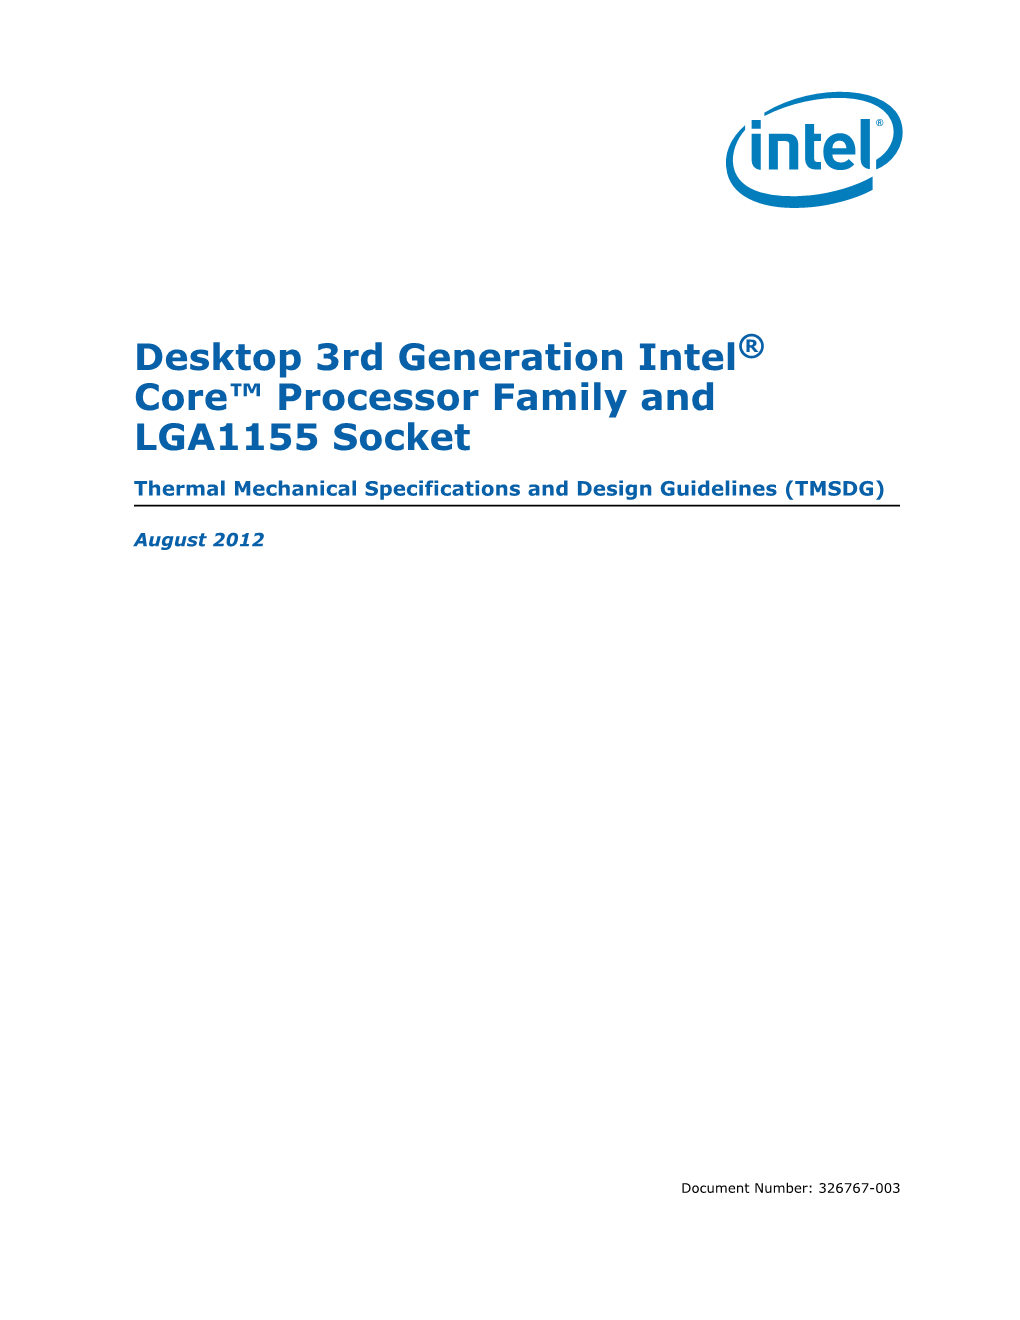 Desktop 3Rd Generation Intel® Core™ Processor Family and LGA1155 Socket